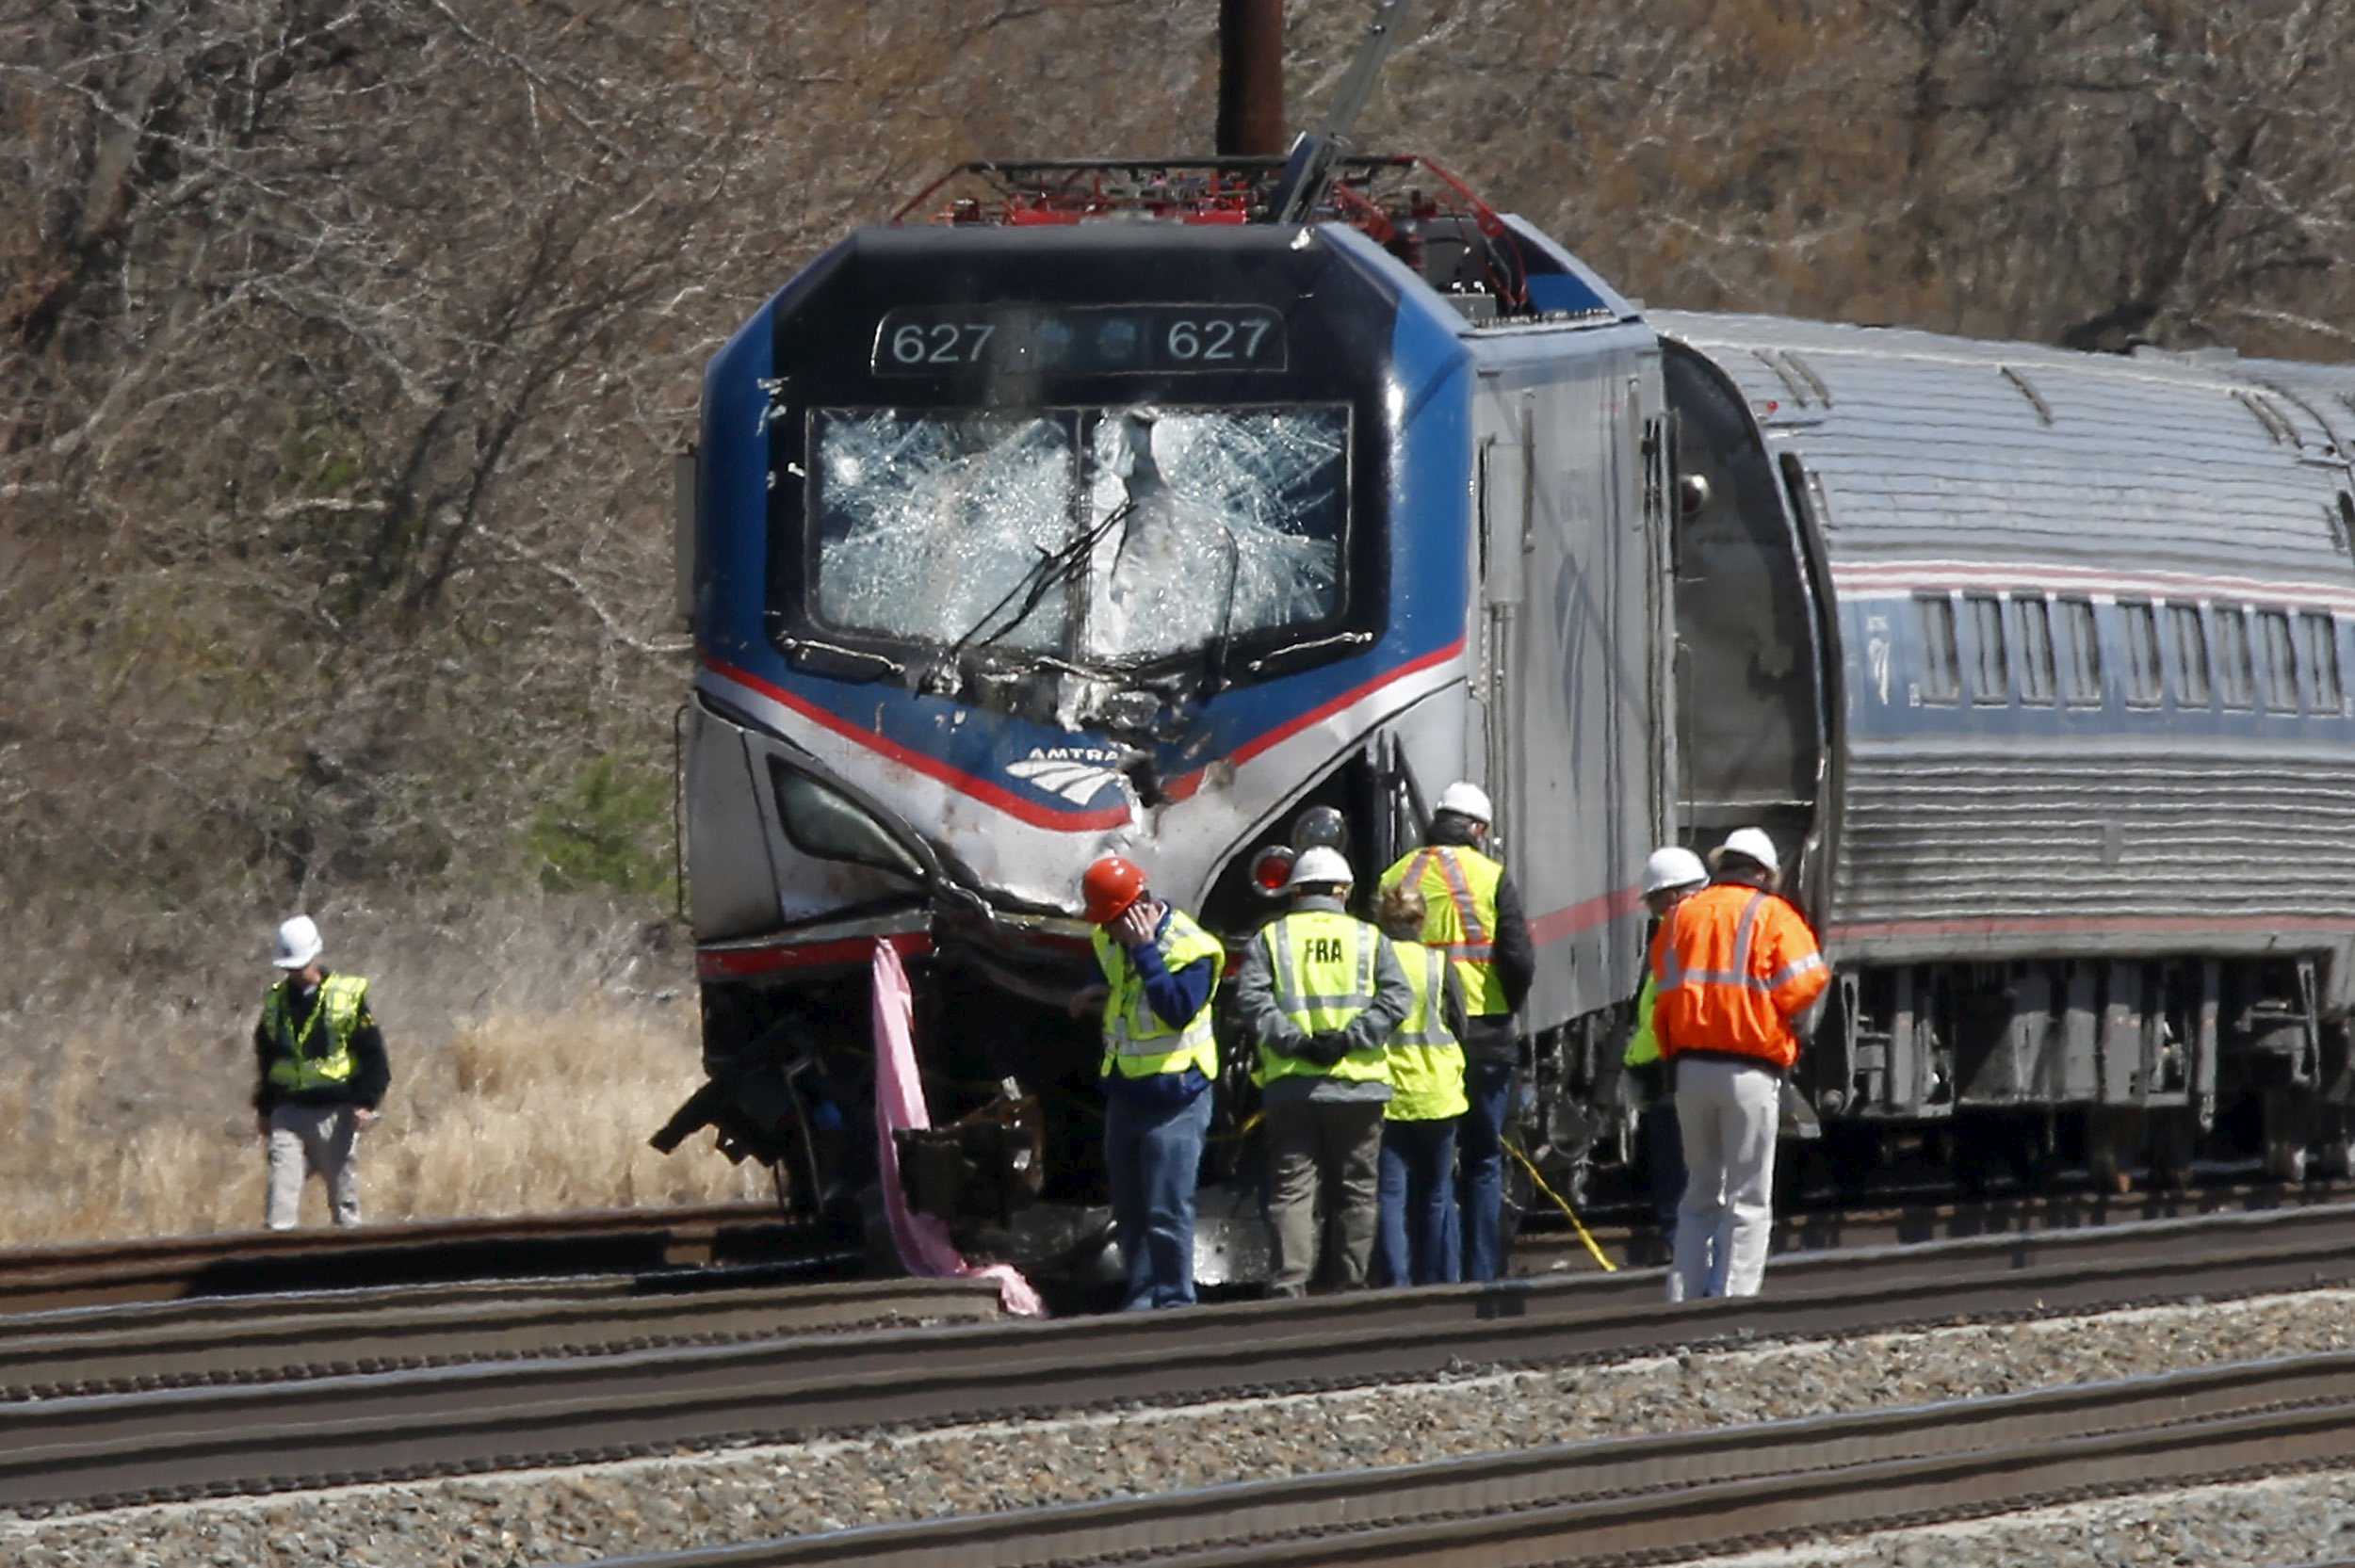 Amtrak train struck backhoe at 106 mph in fatal derailment, officials